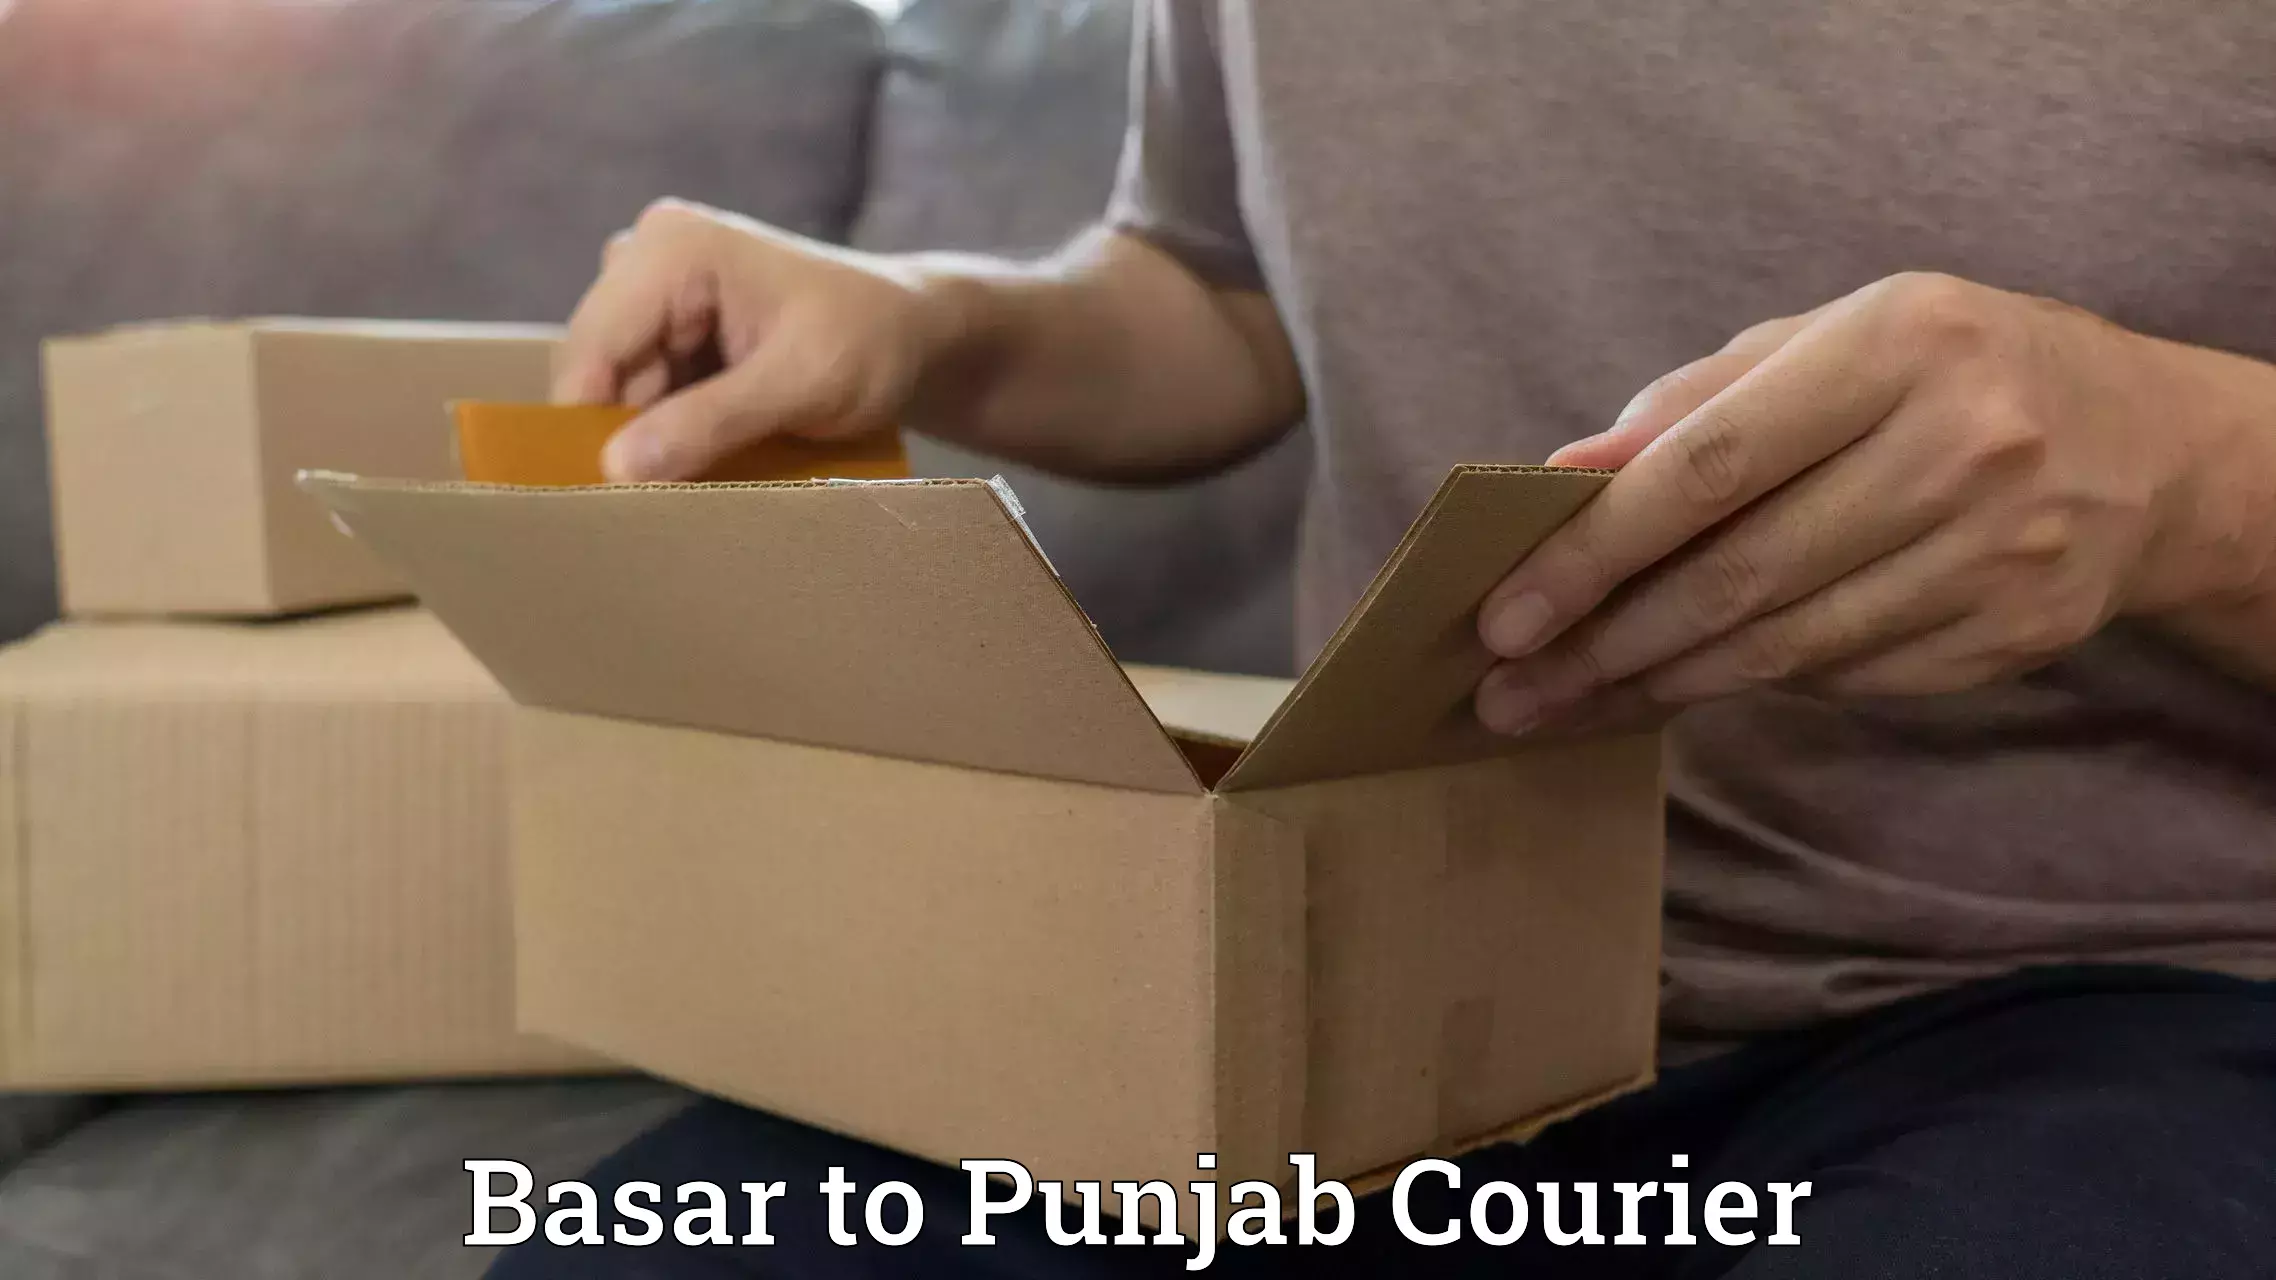 Budget-friendly shipping Basar to Punjab